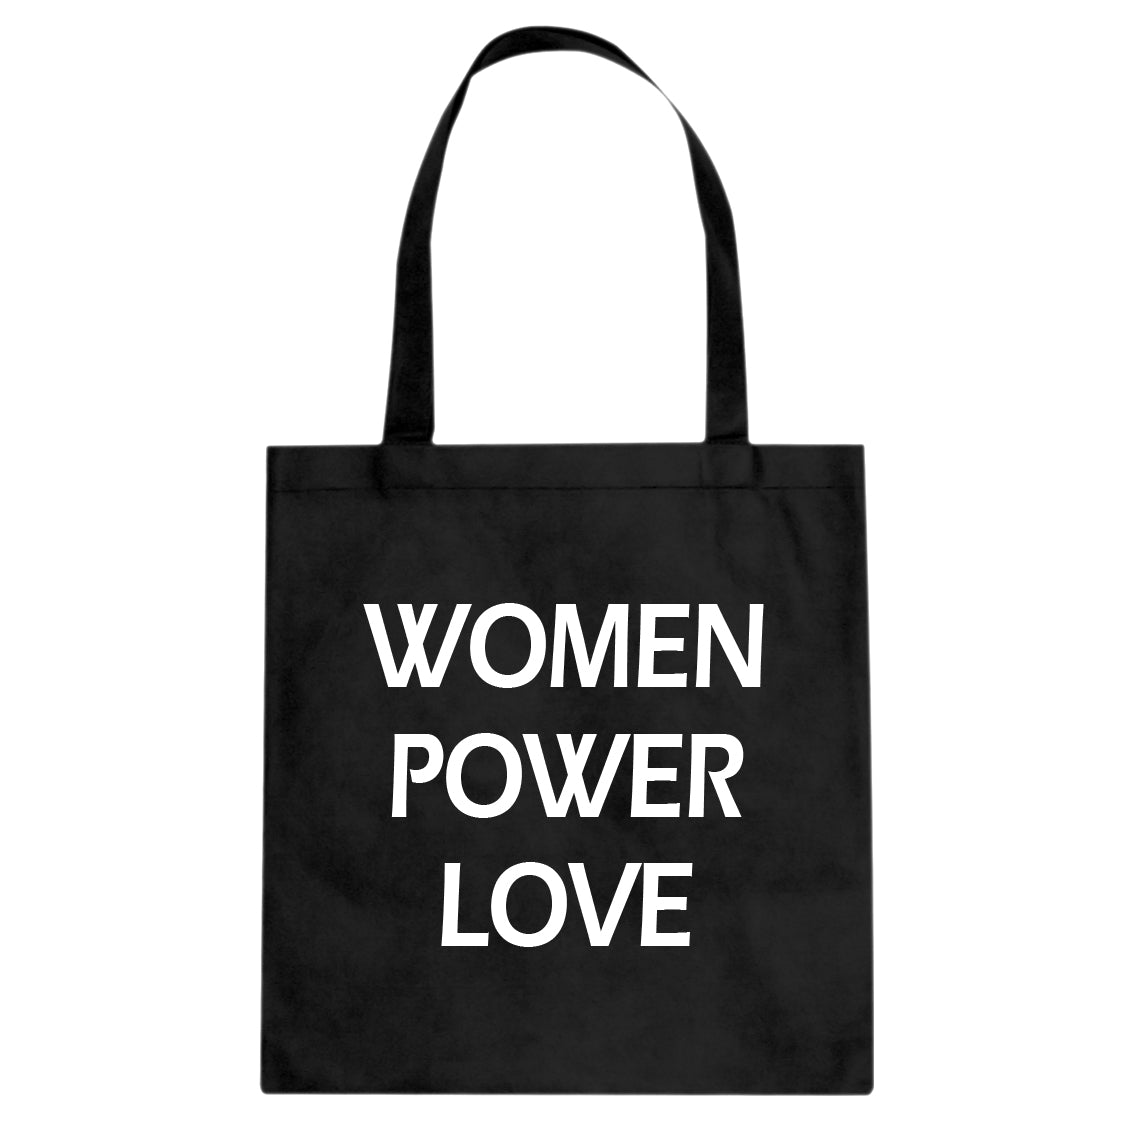 Tote Women Power Love  Canvas Tote Bag